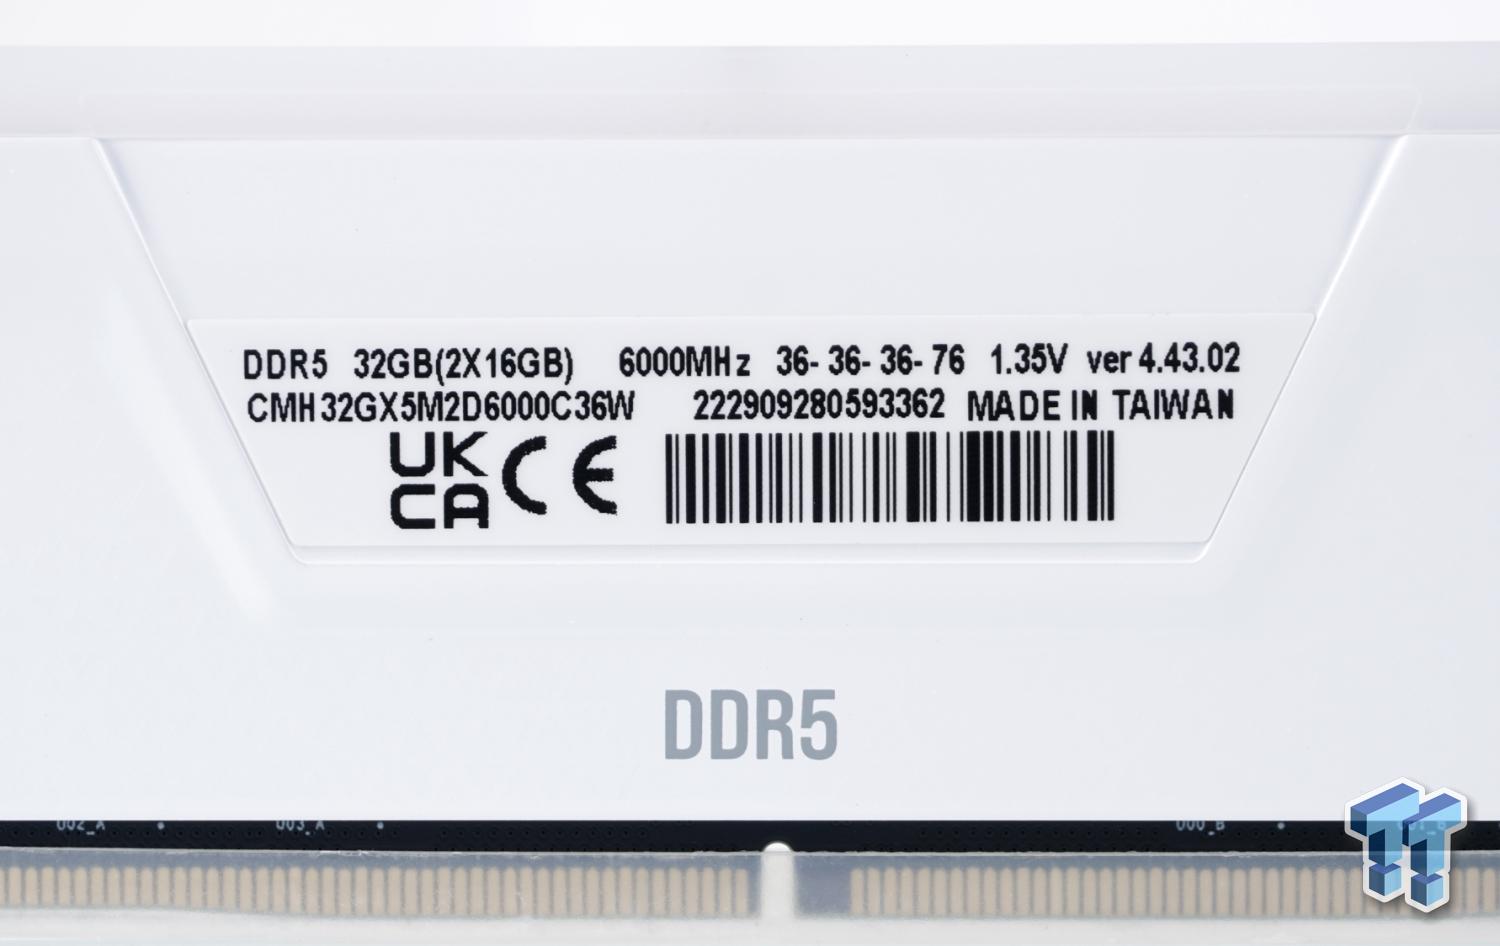 Corsair Vengeance RGB DDR5 RAM 32GB (2x16GB) 6000MHz CL36 Memory